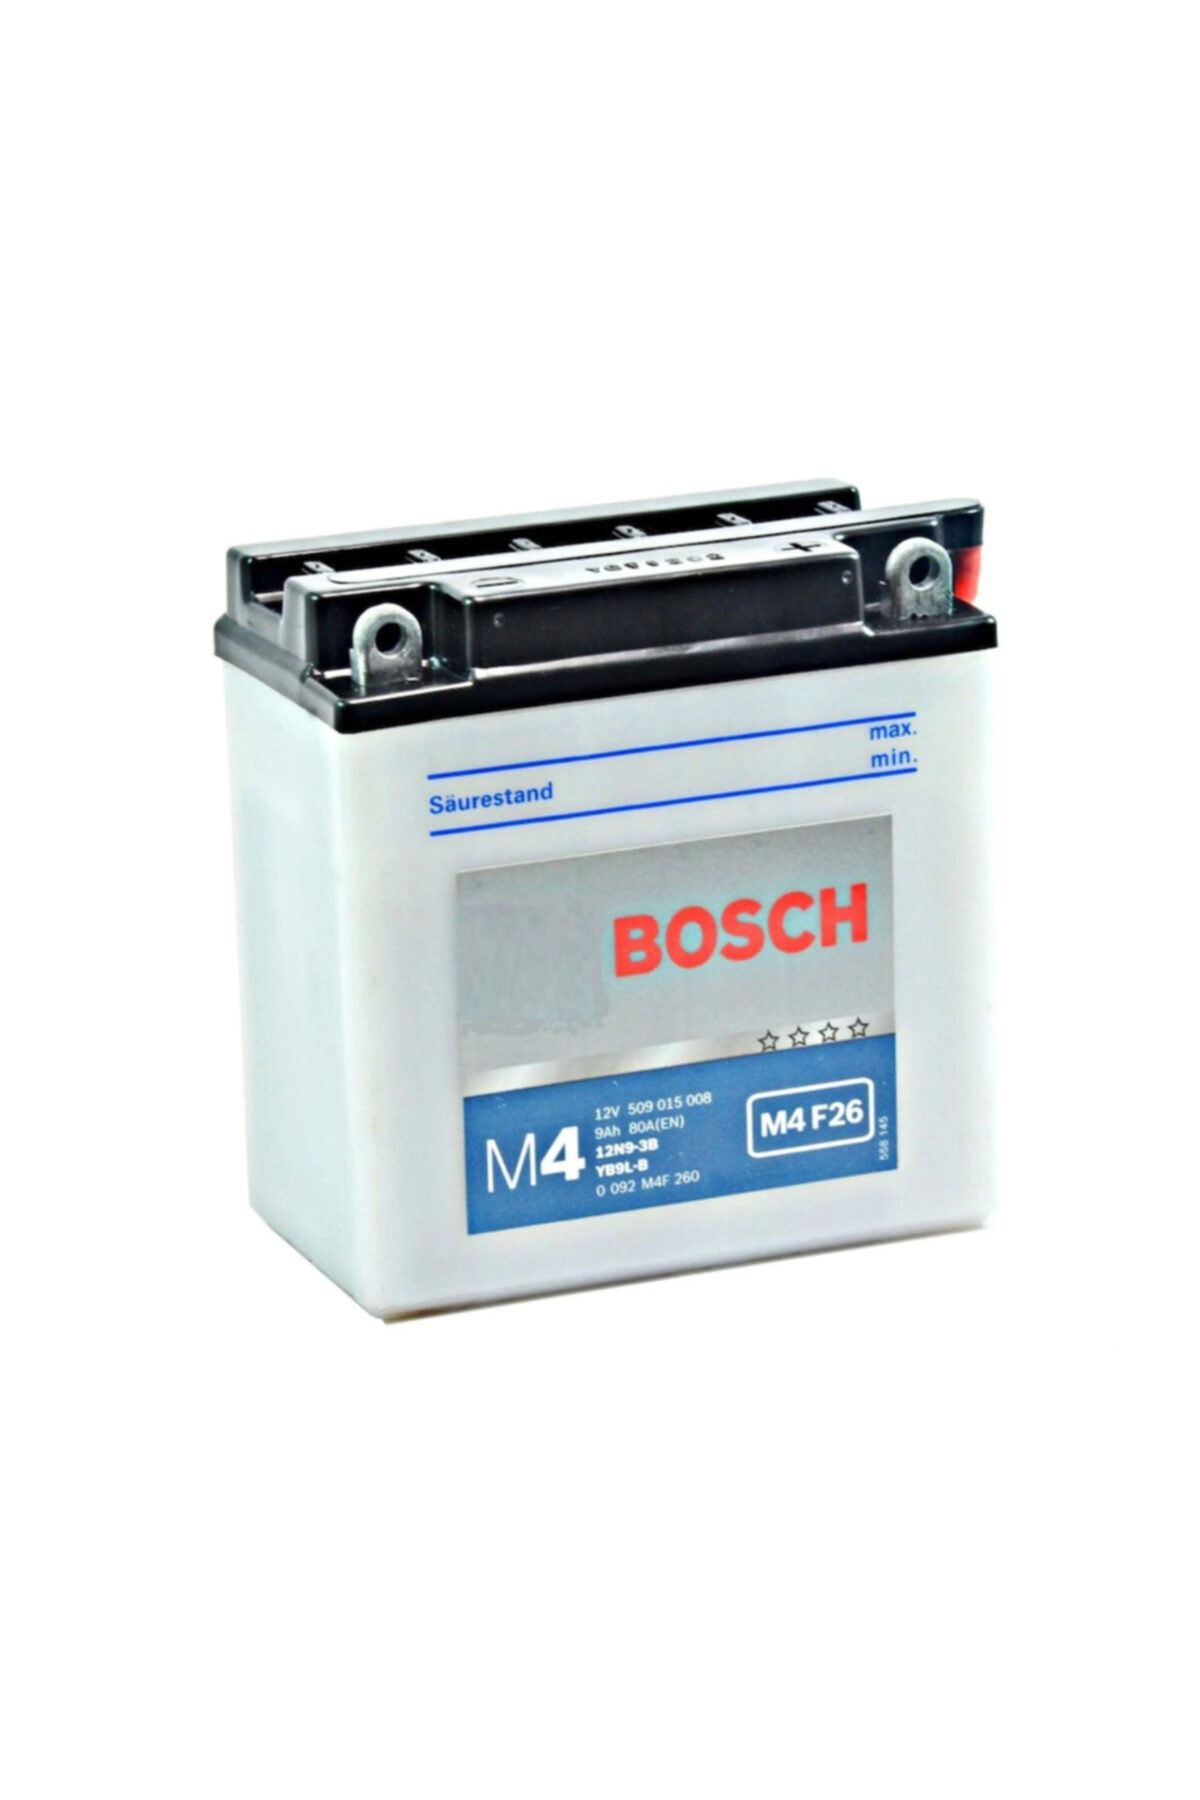 Bosch M4f26 12n9-3b Yb9l-b 12 V 9 Amper Motosiklet Akü (DİJİTAL MARKET)